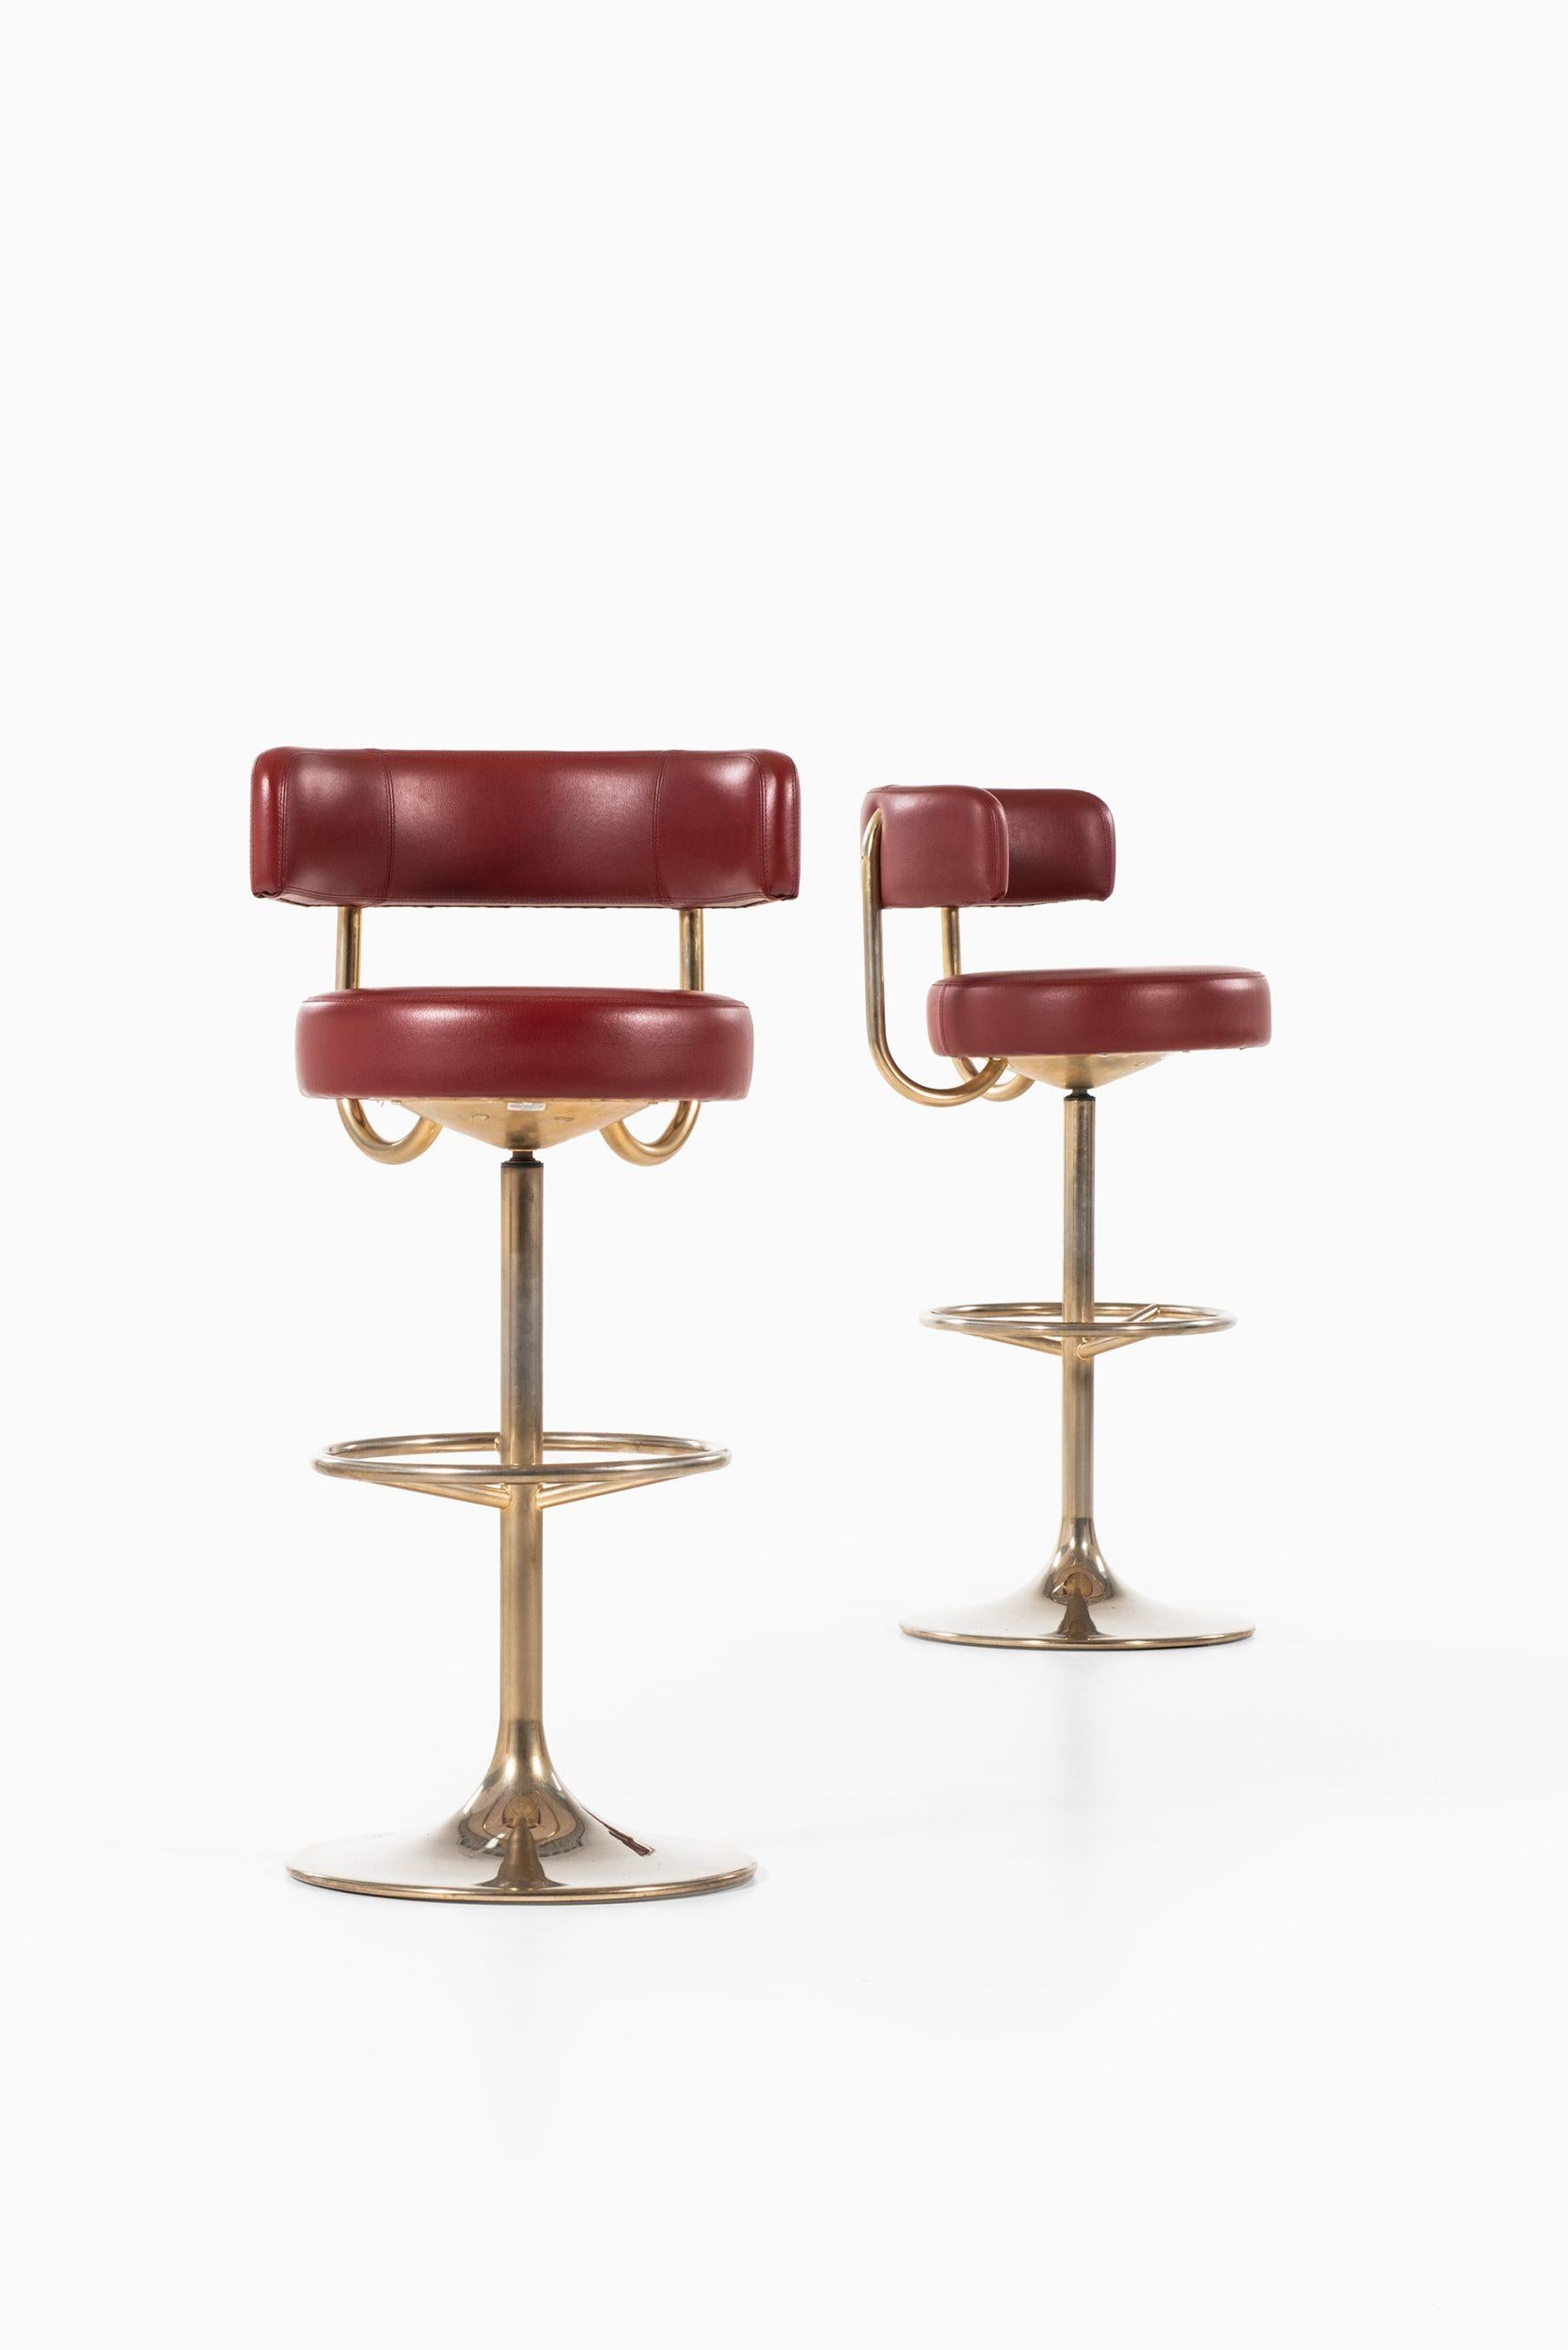 Bar stools designed by Börje Johanson. Produced by Johanson Design in Markaryd, Sweden.